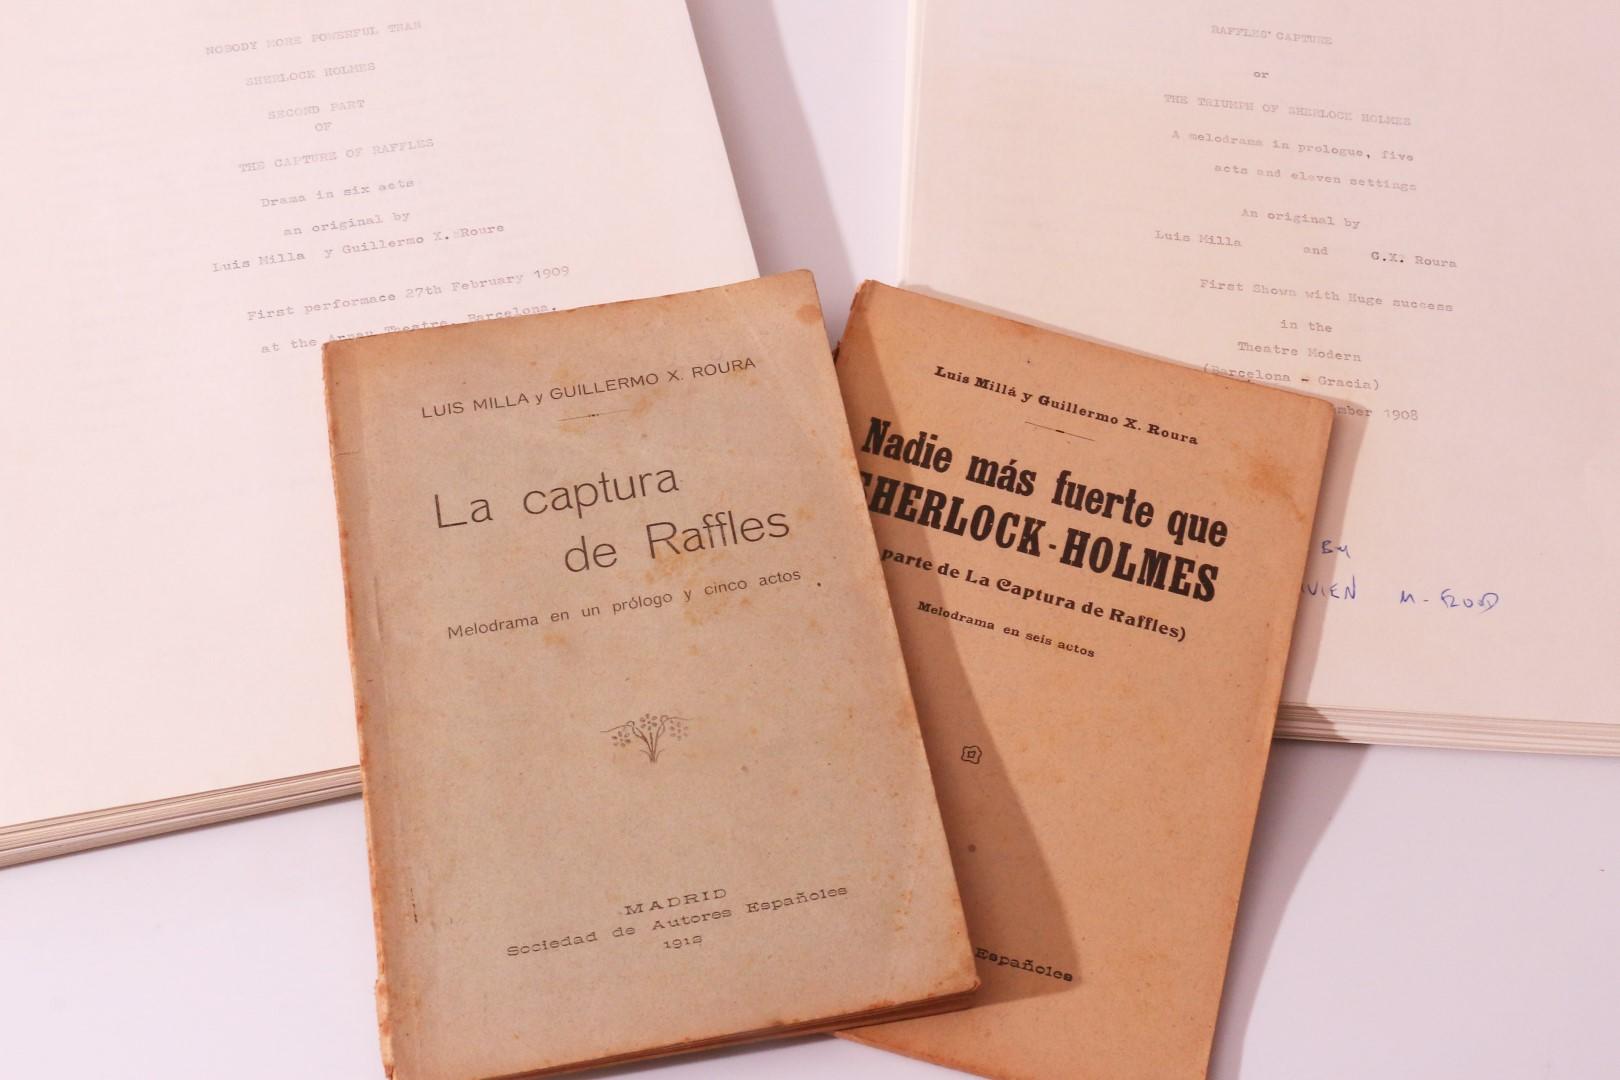 Luis Milla & Guillermo X. Roura [trans. Vivien M Flood.] - La Captura de Raffles [Shelockiana] - Socieded de Autores Espanoles, n.d. [book 1912-1913], Manuscript.